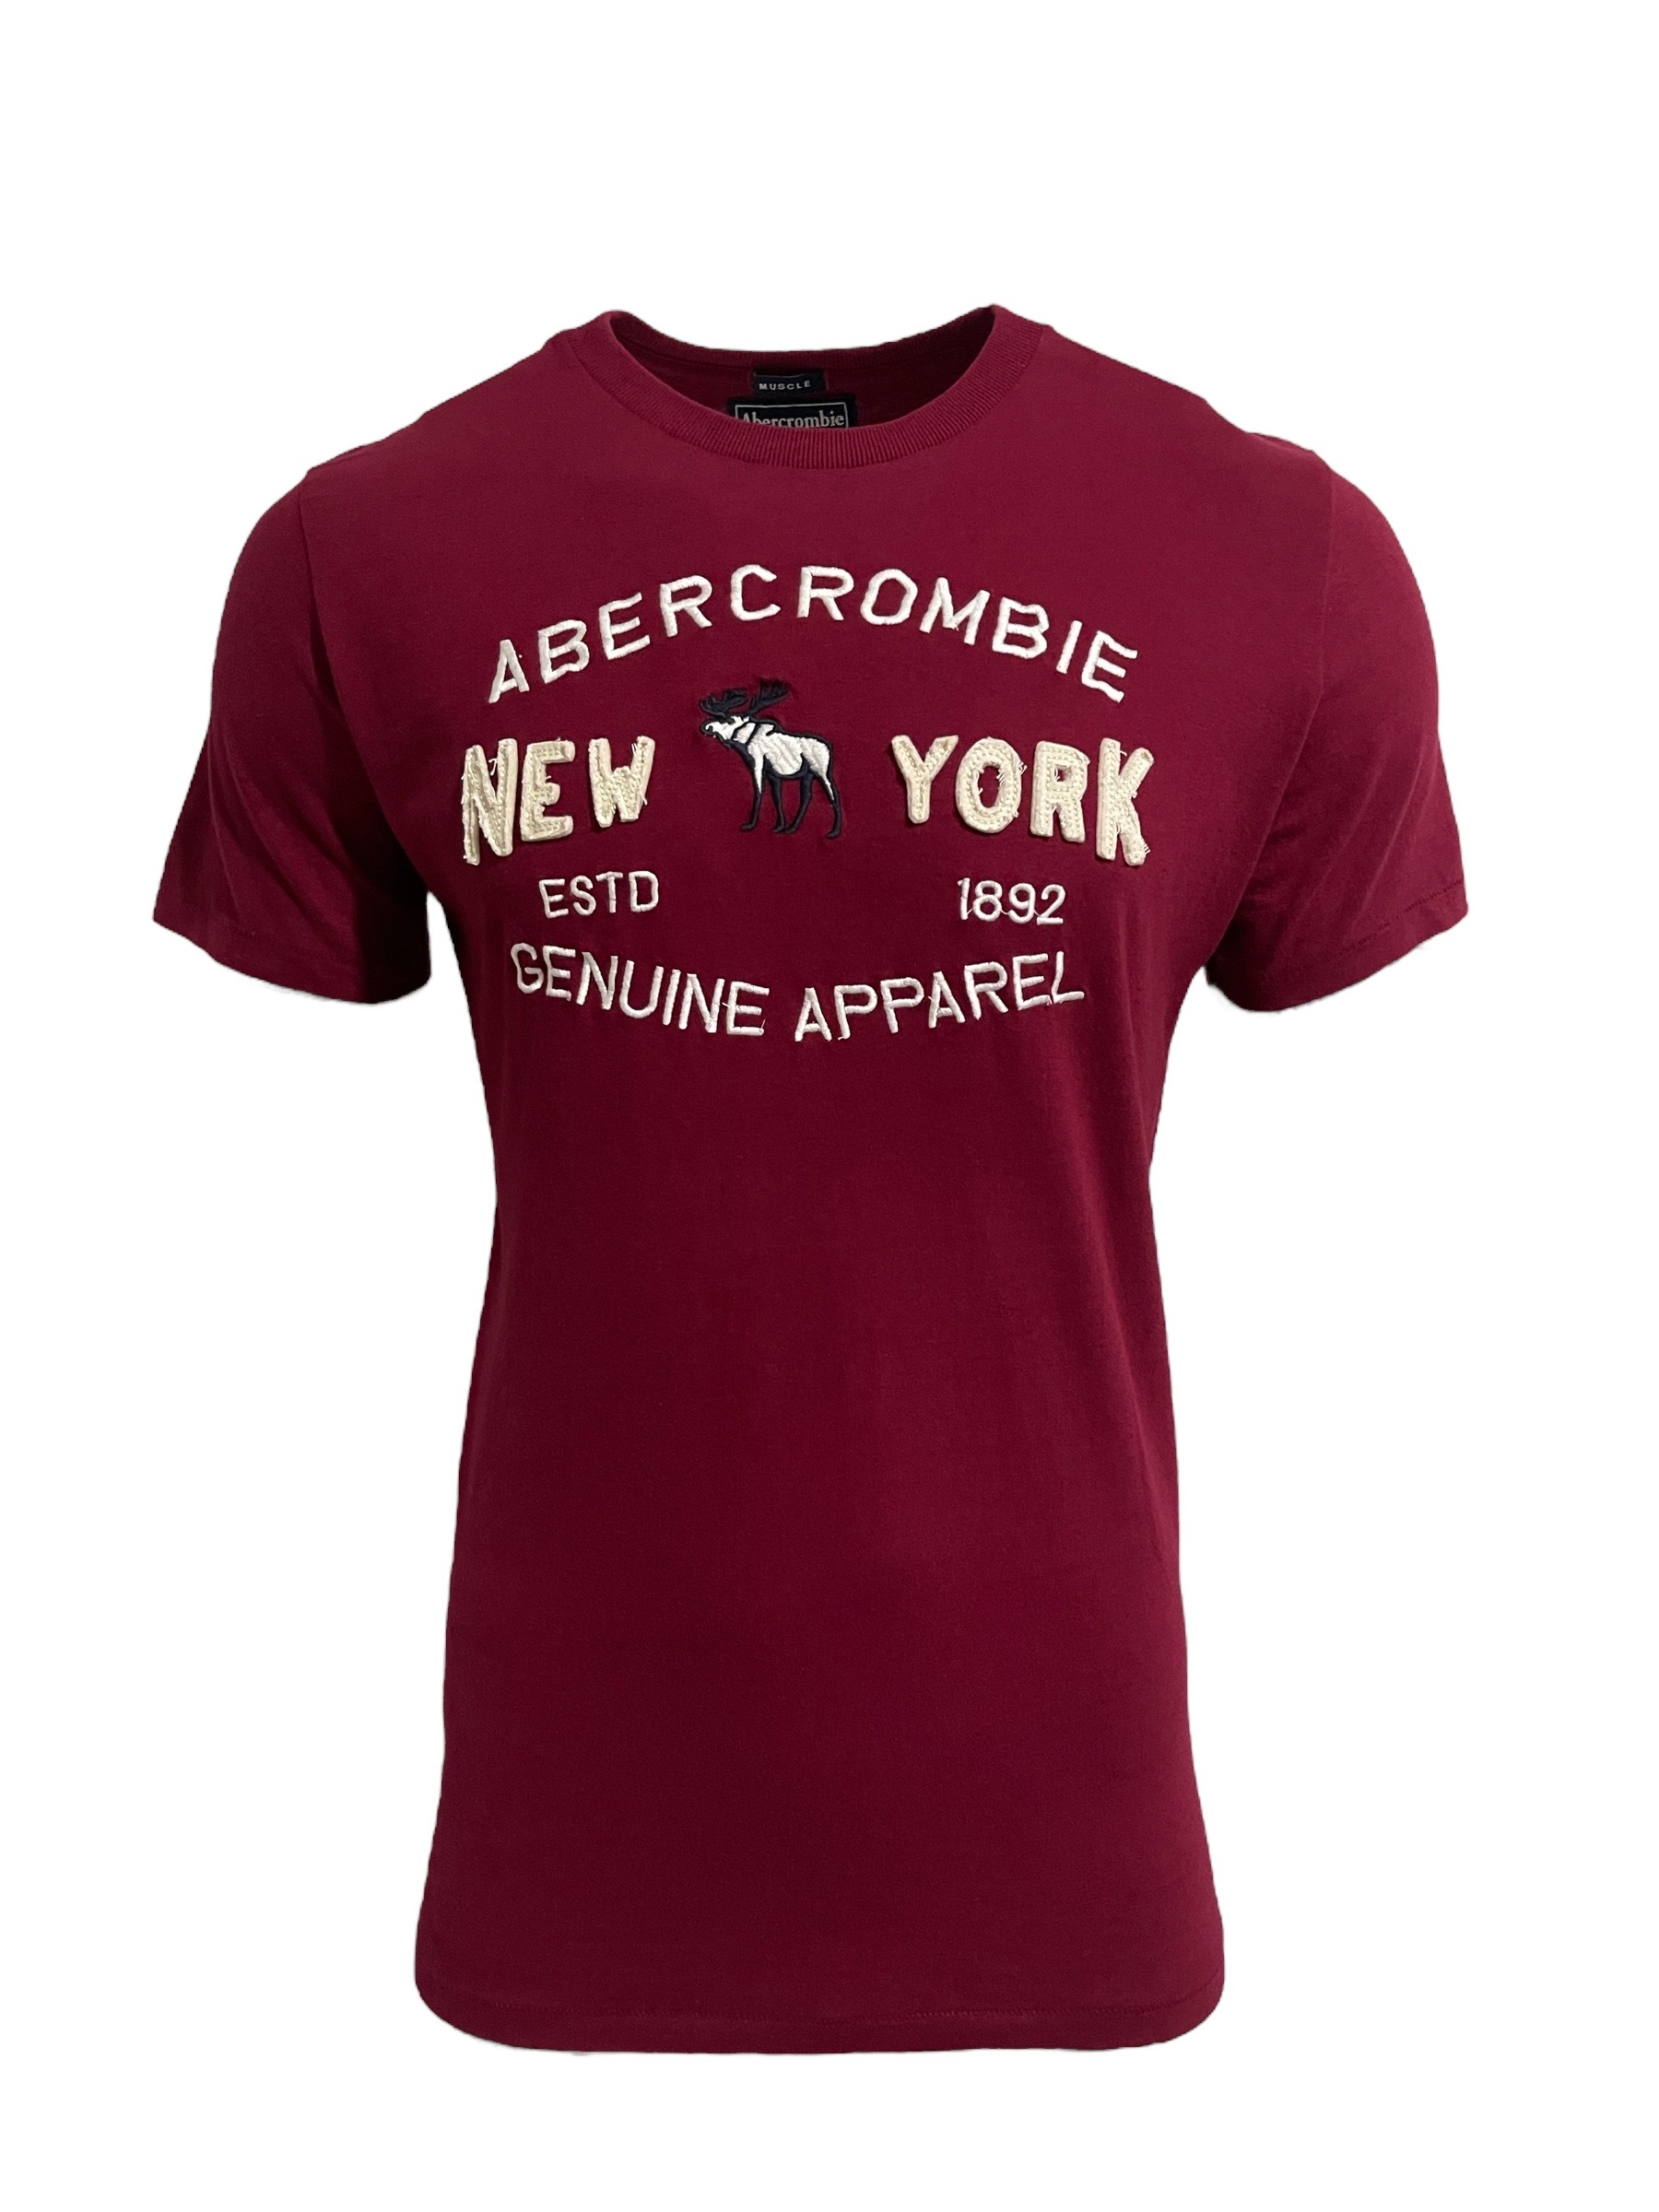 Camiseta Abercrombie Masculina Muscle A&F New York 1892 Rosa Mescla